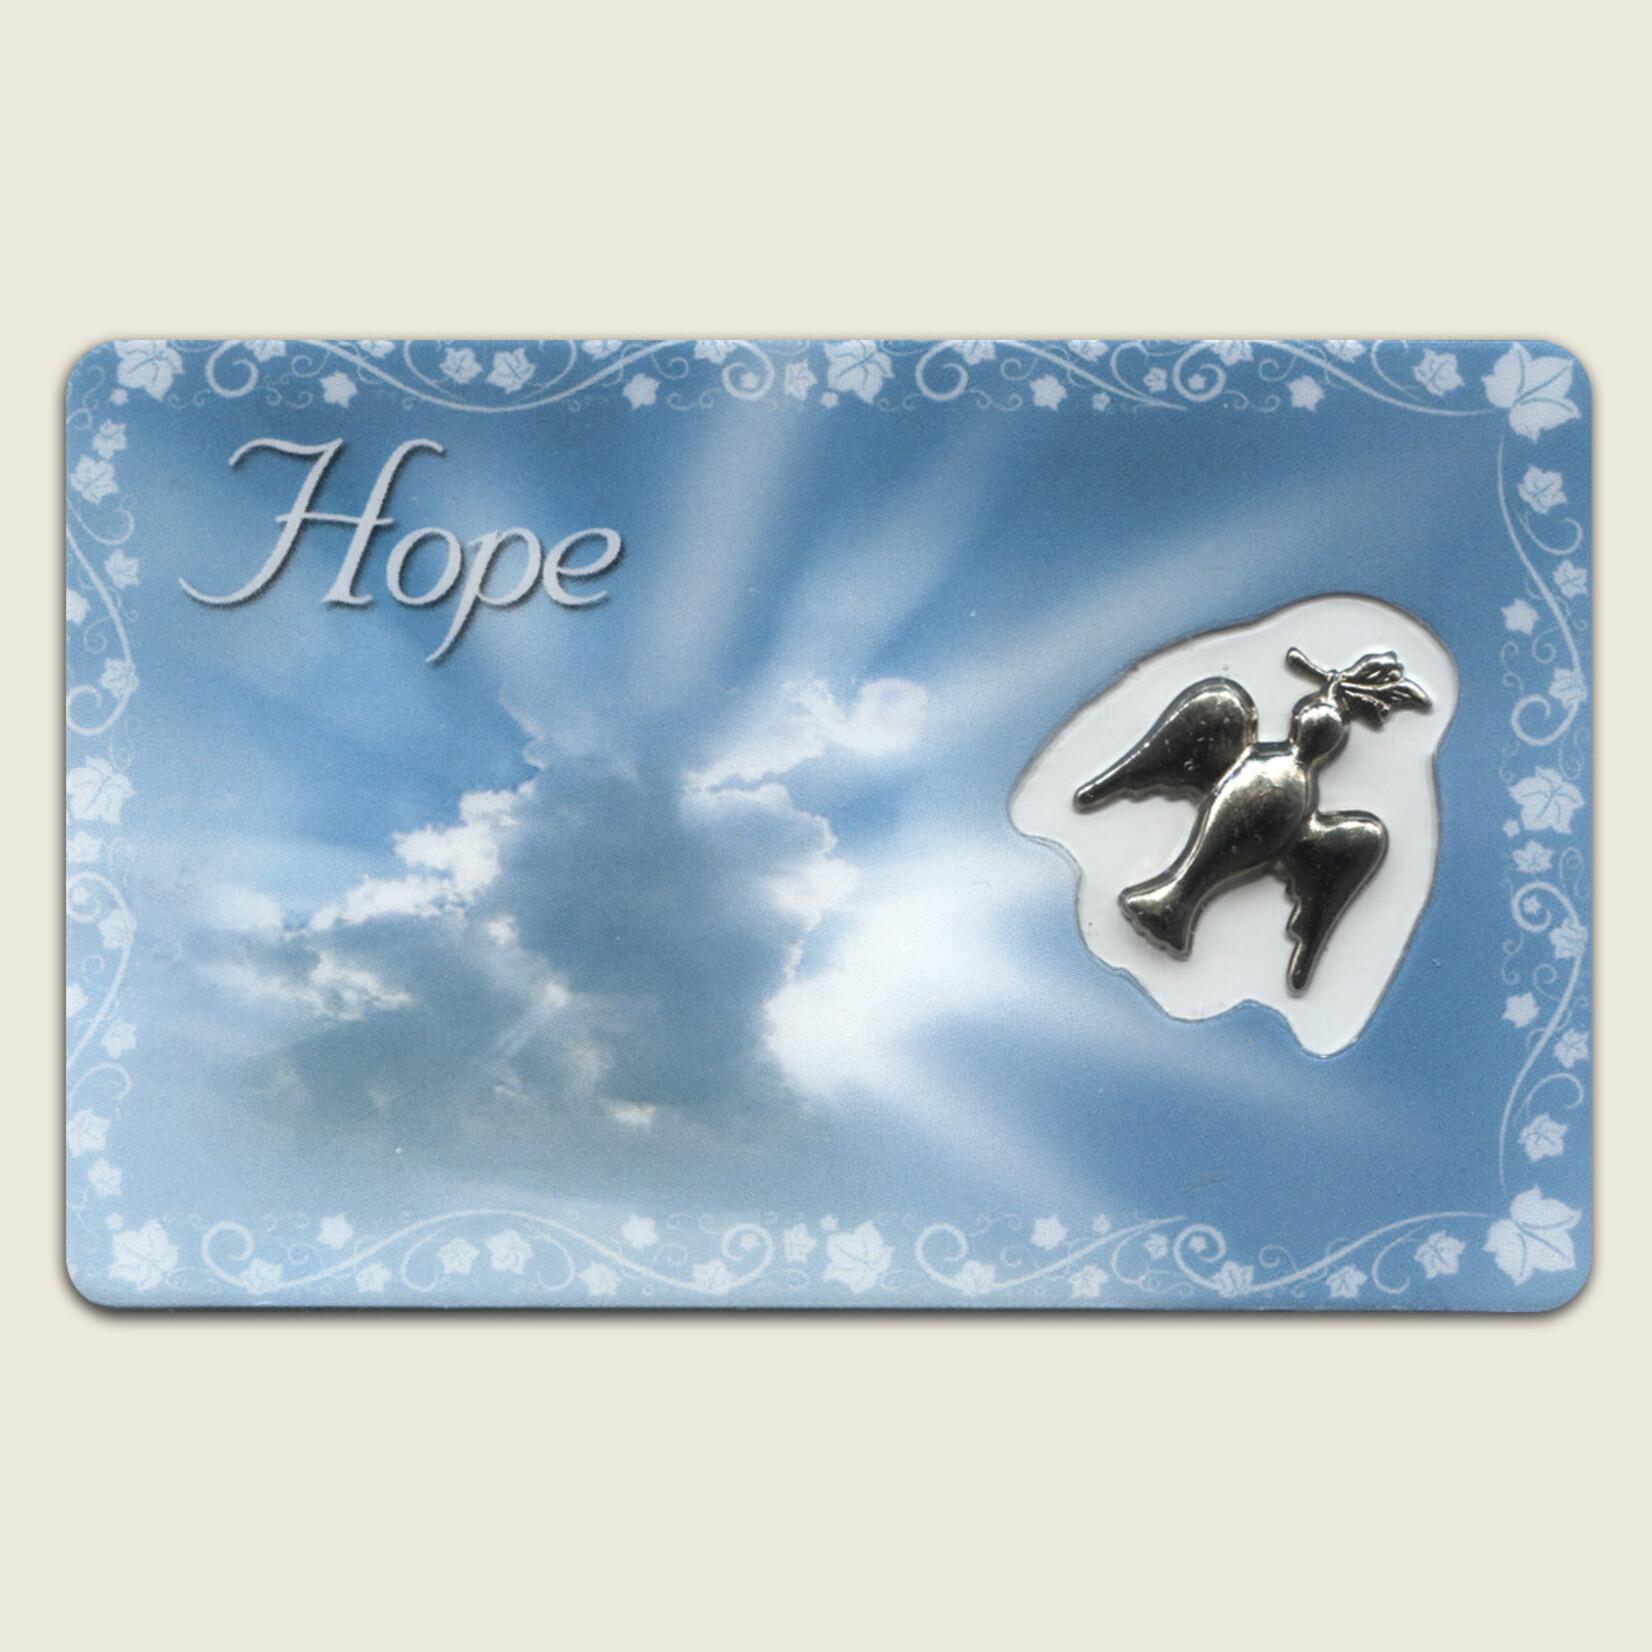 Hope Prayer Card With Medal